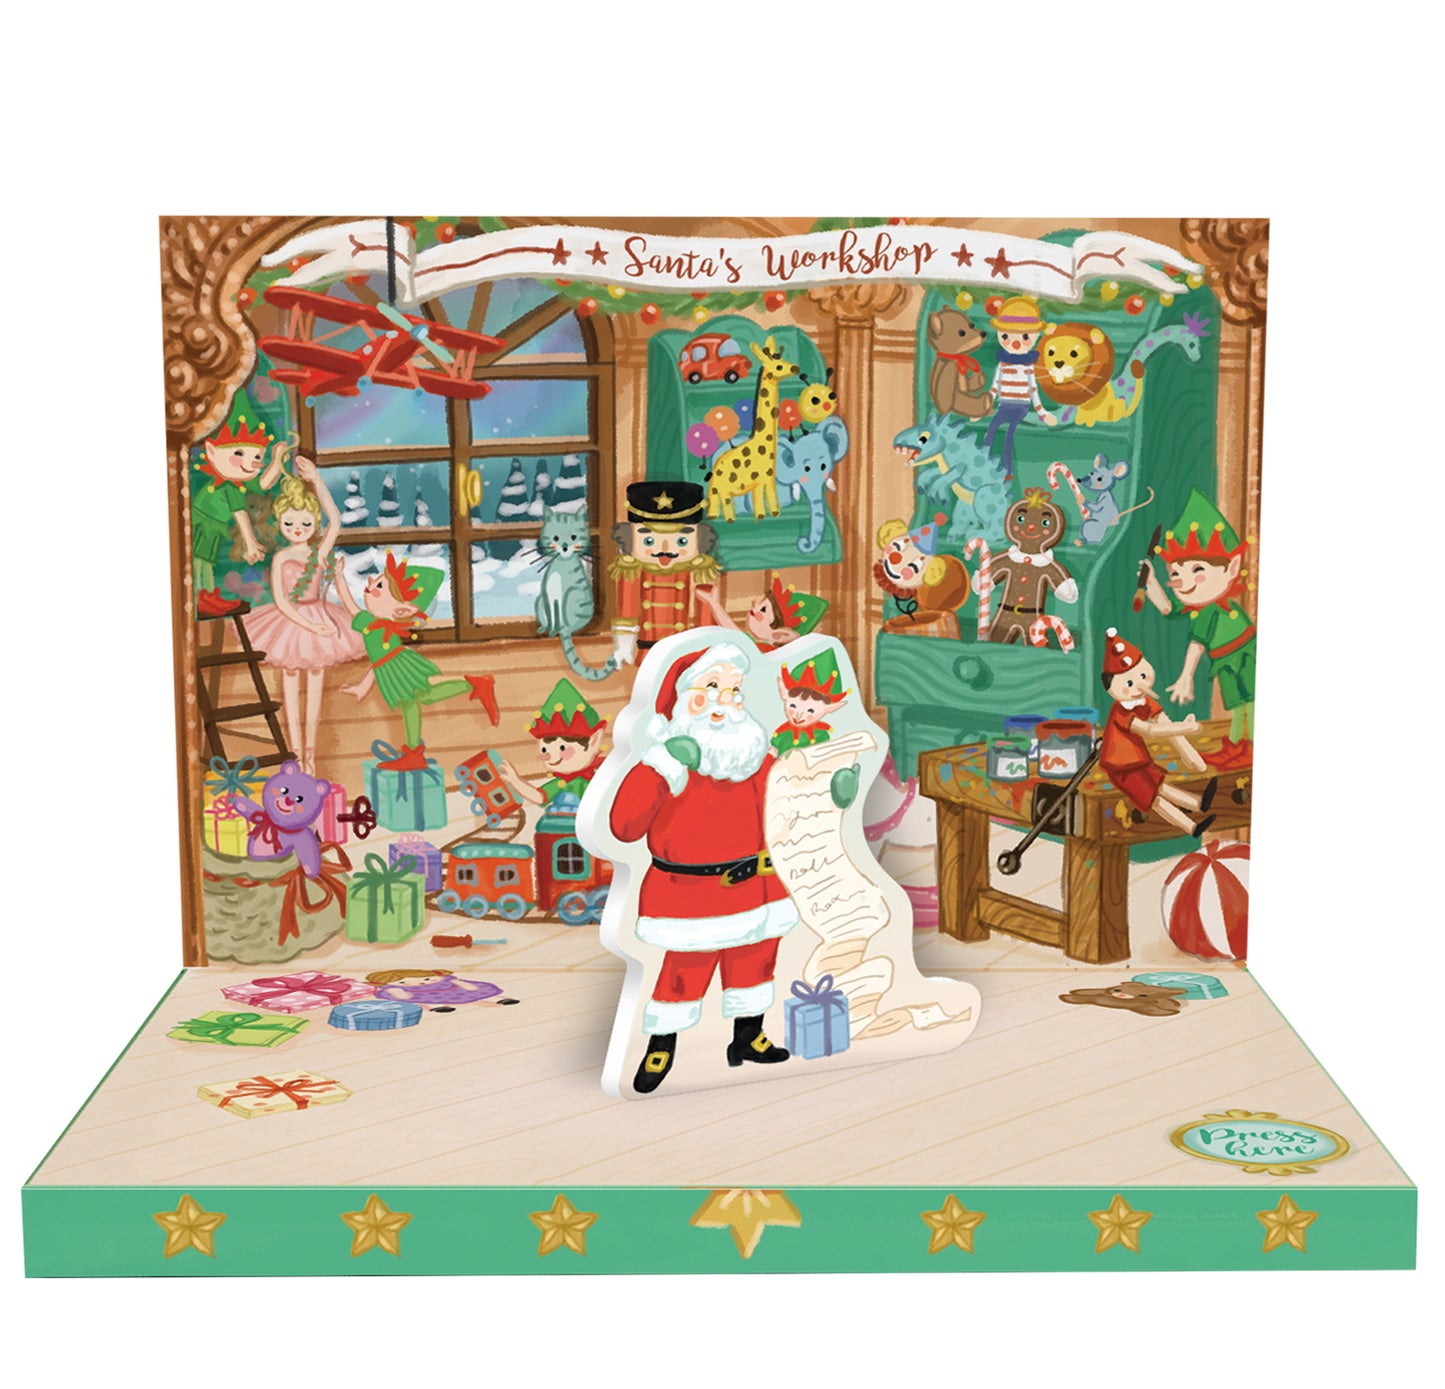 Santa's Workshop Music Box Card Novelty Dancing Musical Christmas Card